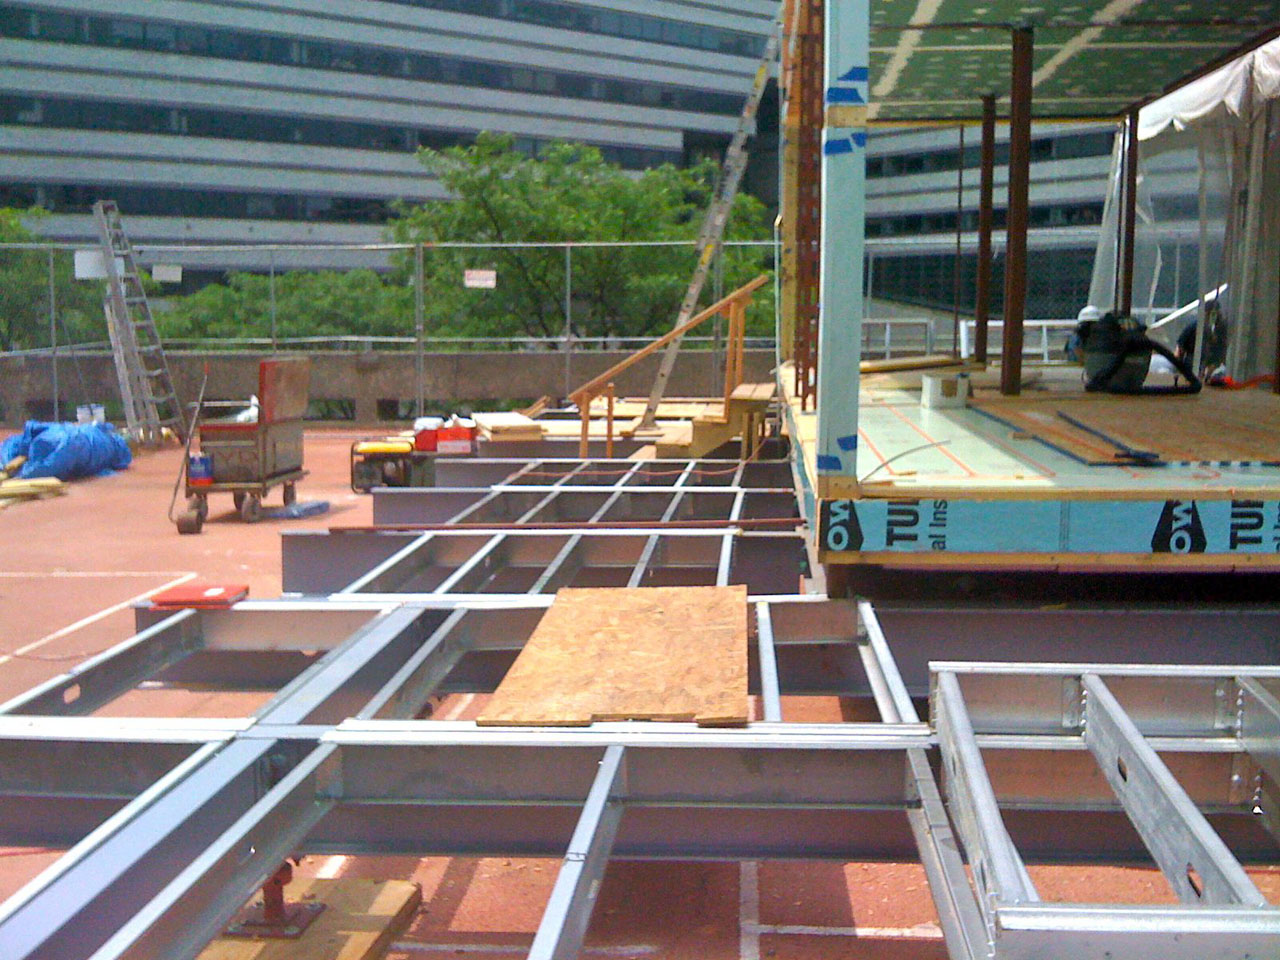 Solar Decathlon 2011 Team New York's Solar Roof Pod construction